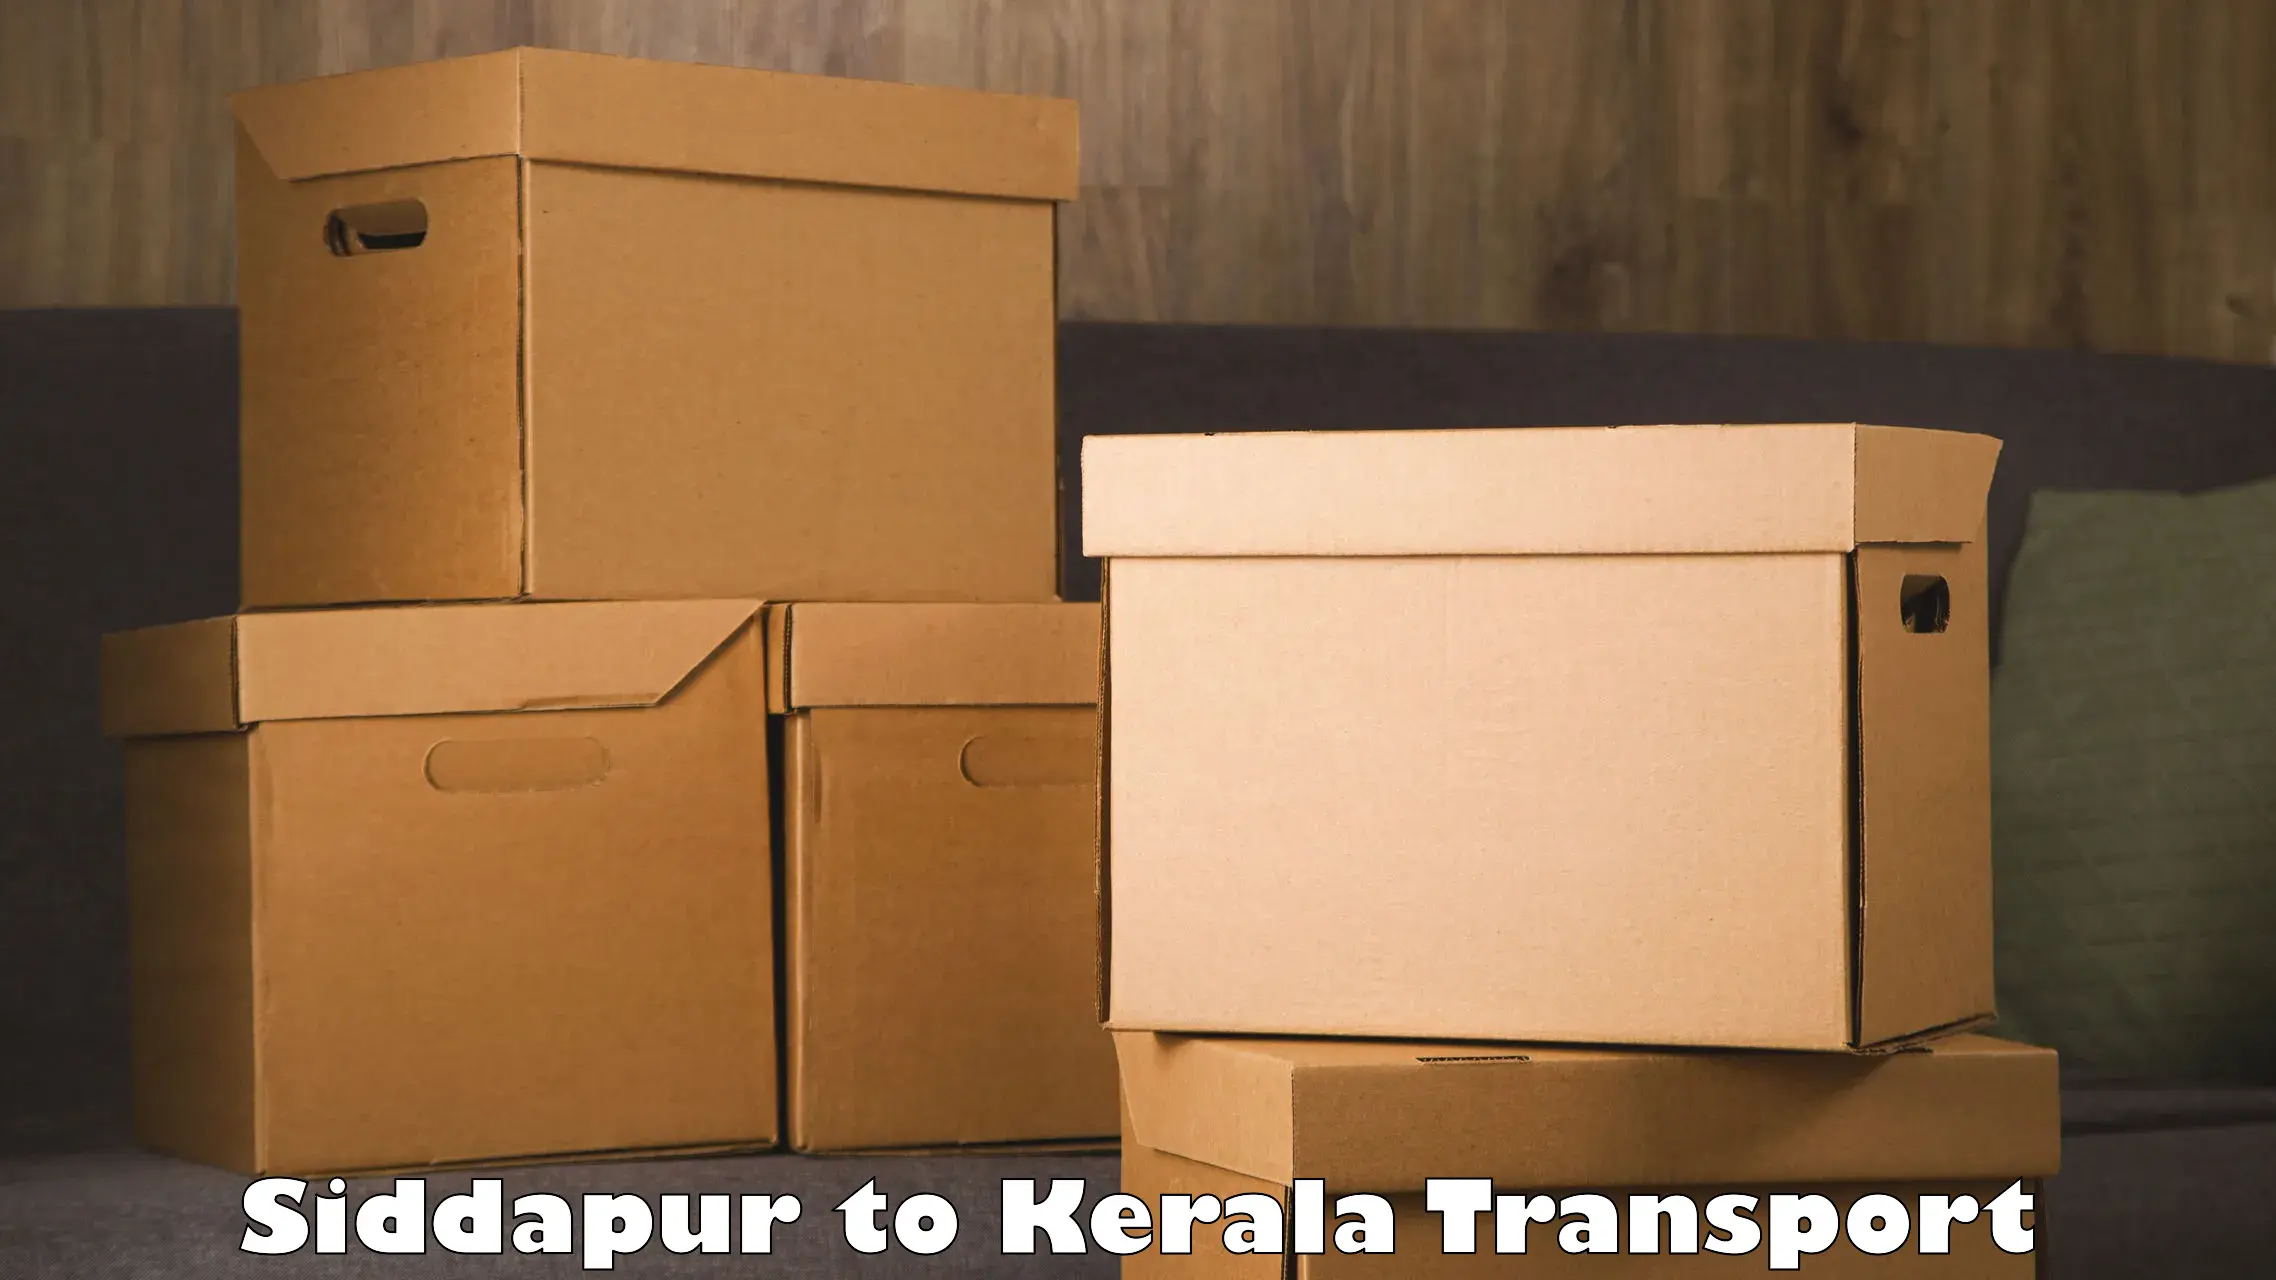 Transport in sharing Siddapur to Kerala